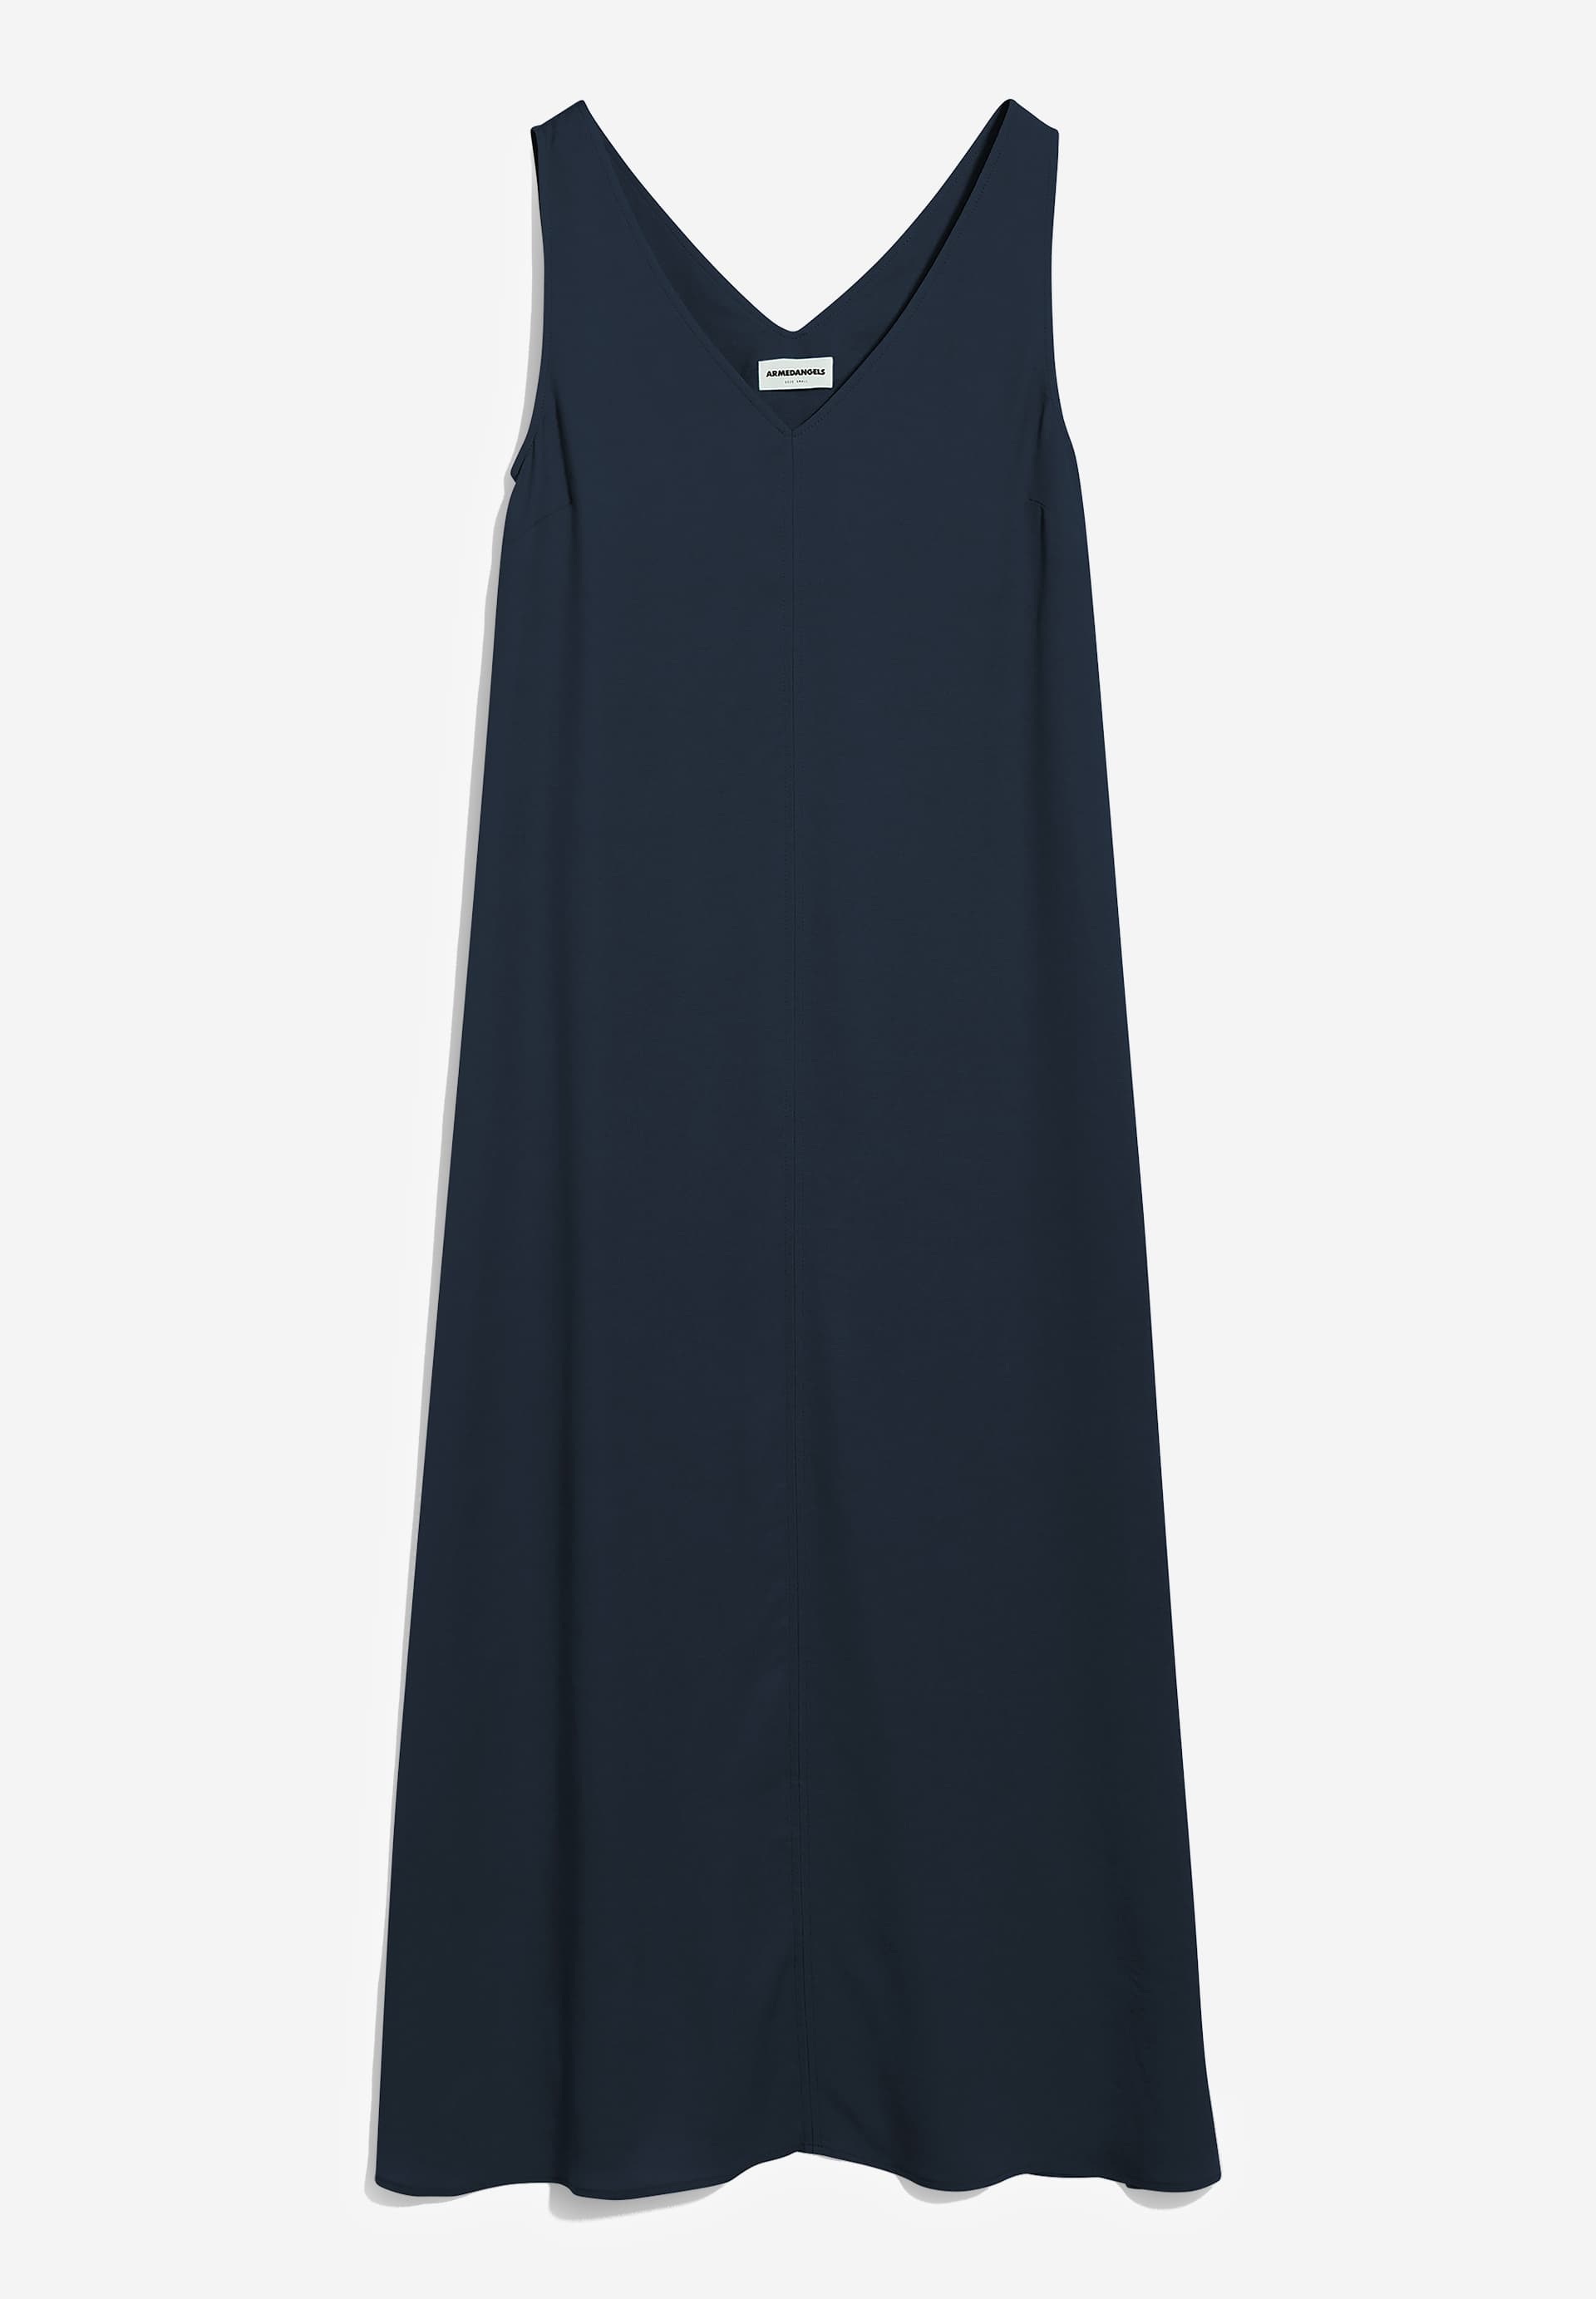 LYLIAA Woven Dress Regular Fit made of TENCEL™ Lyocell